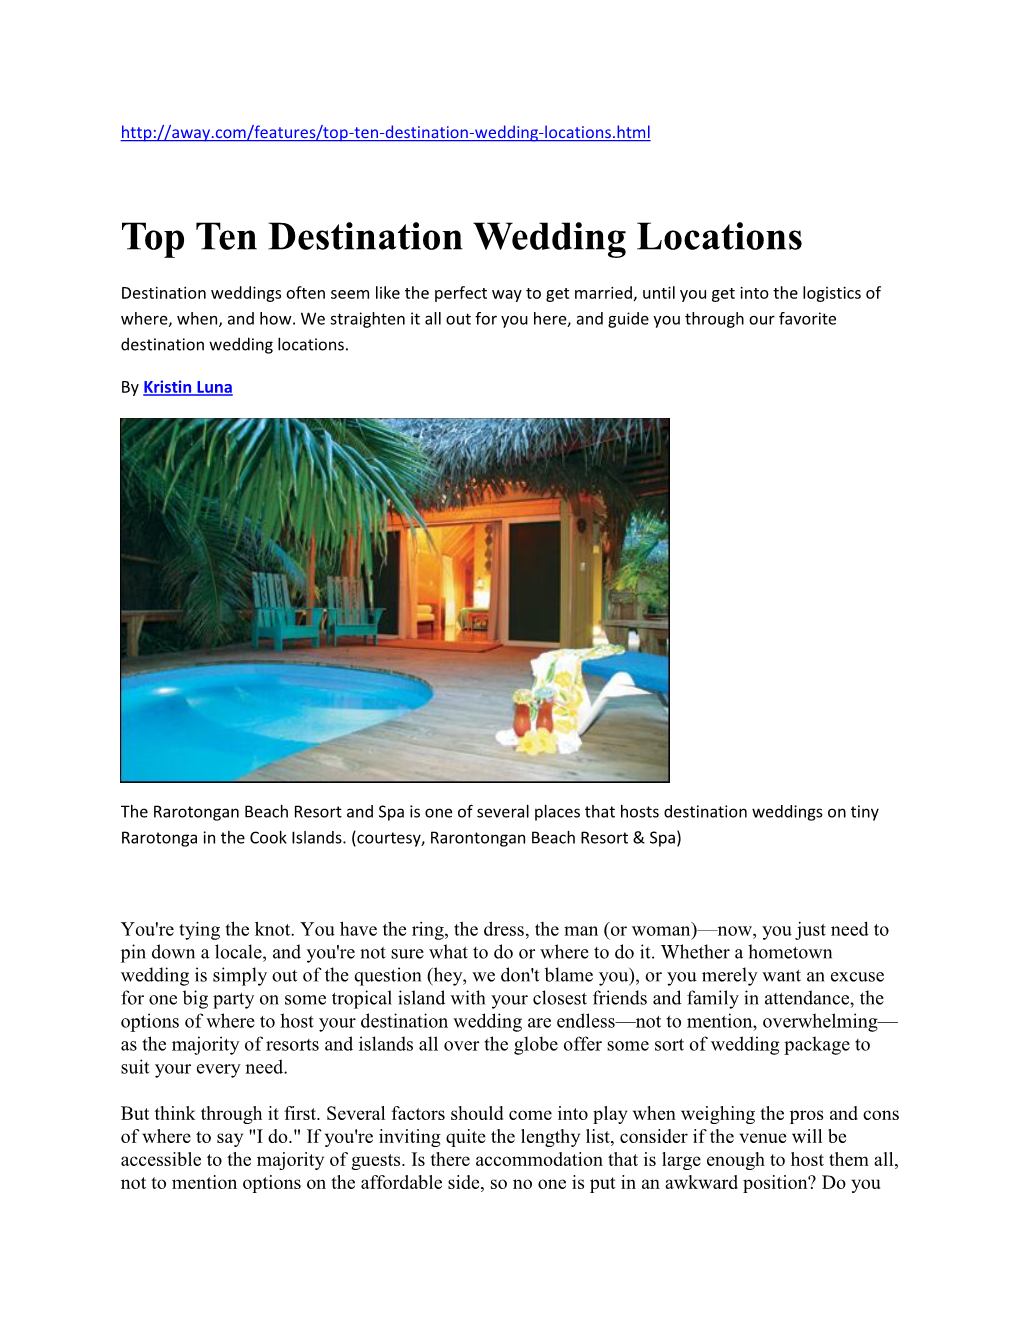 Top Ten Destination Wedding Locations